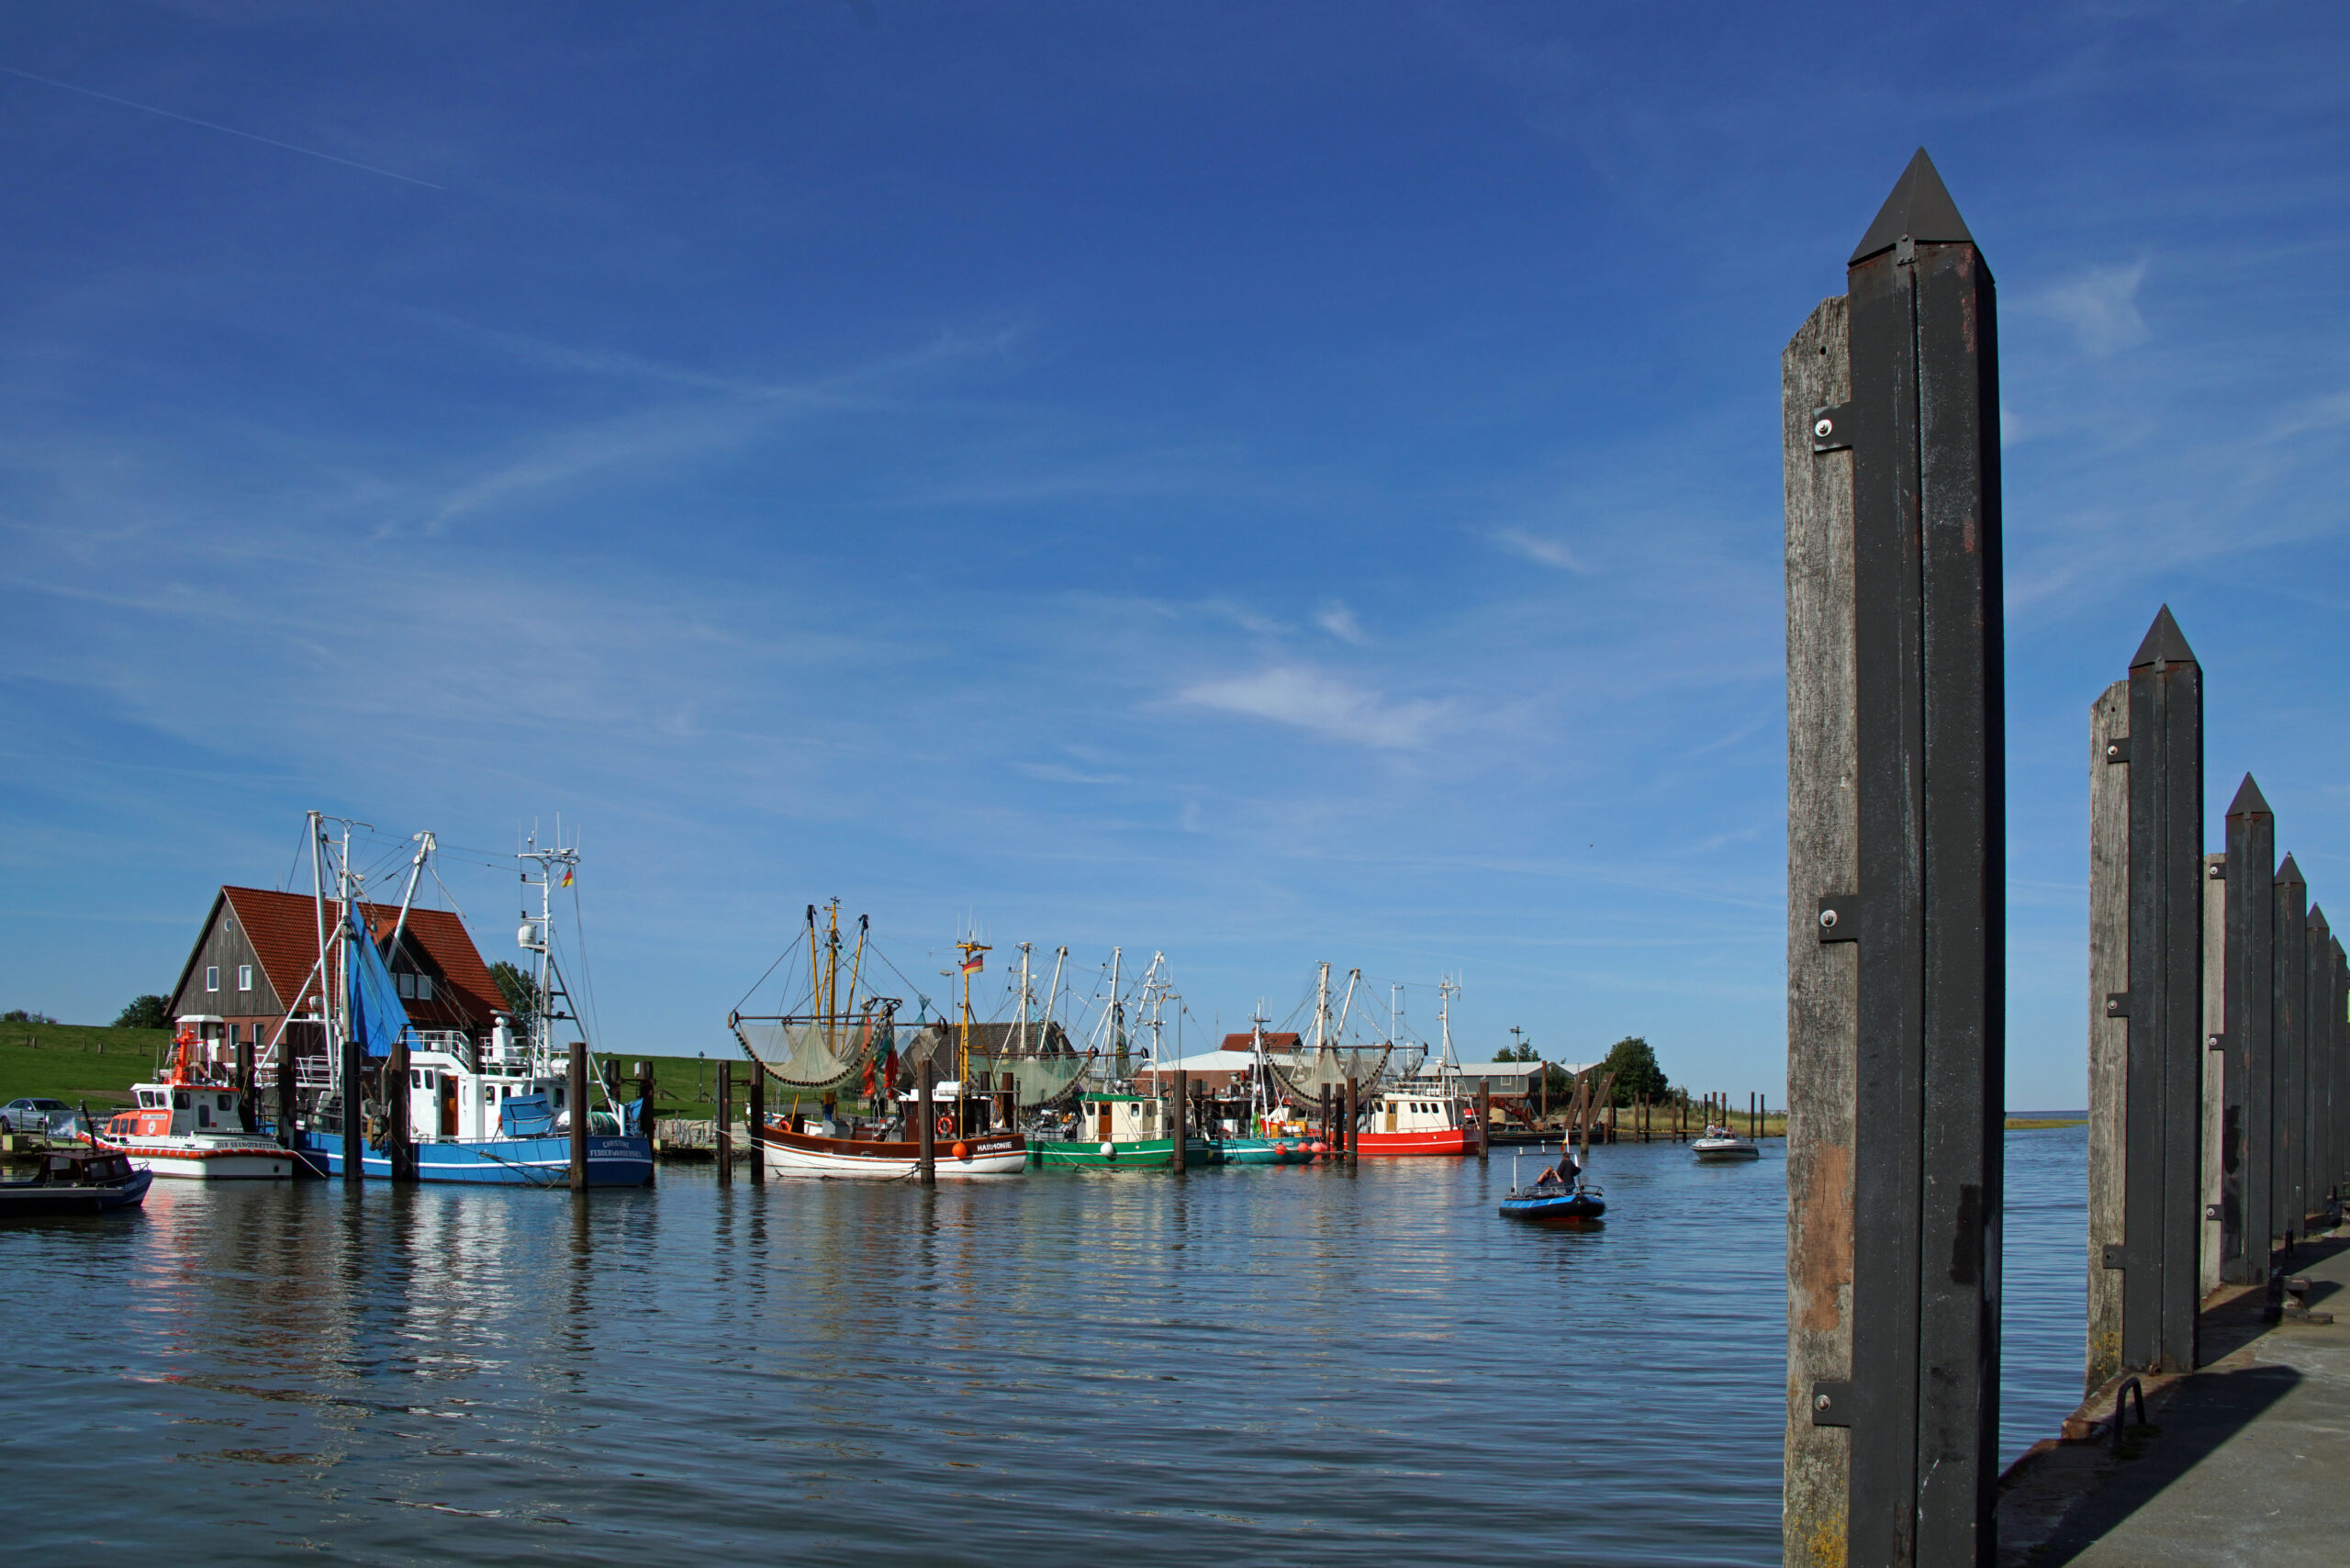 Nordsee Butjadingen Hafen in Fedderwardersiel: Krabbenkutter